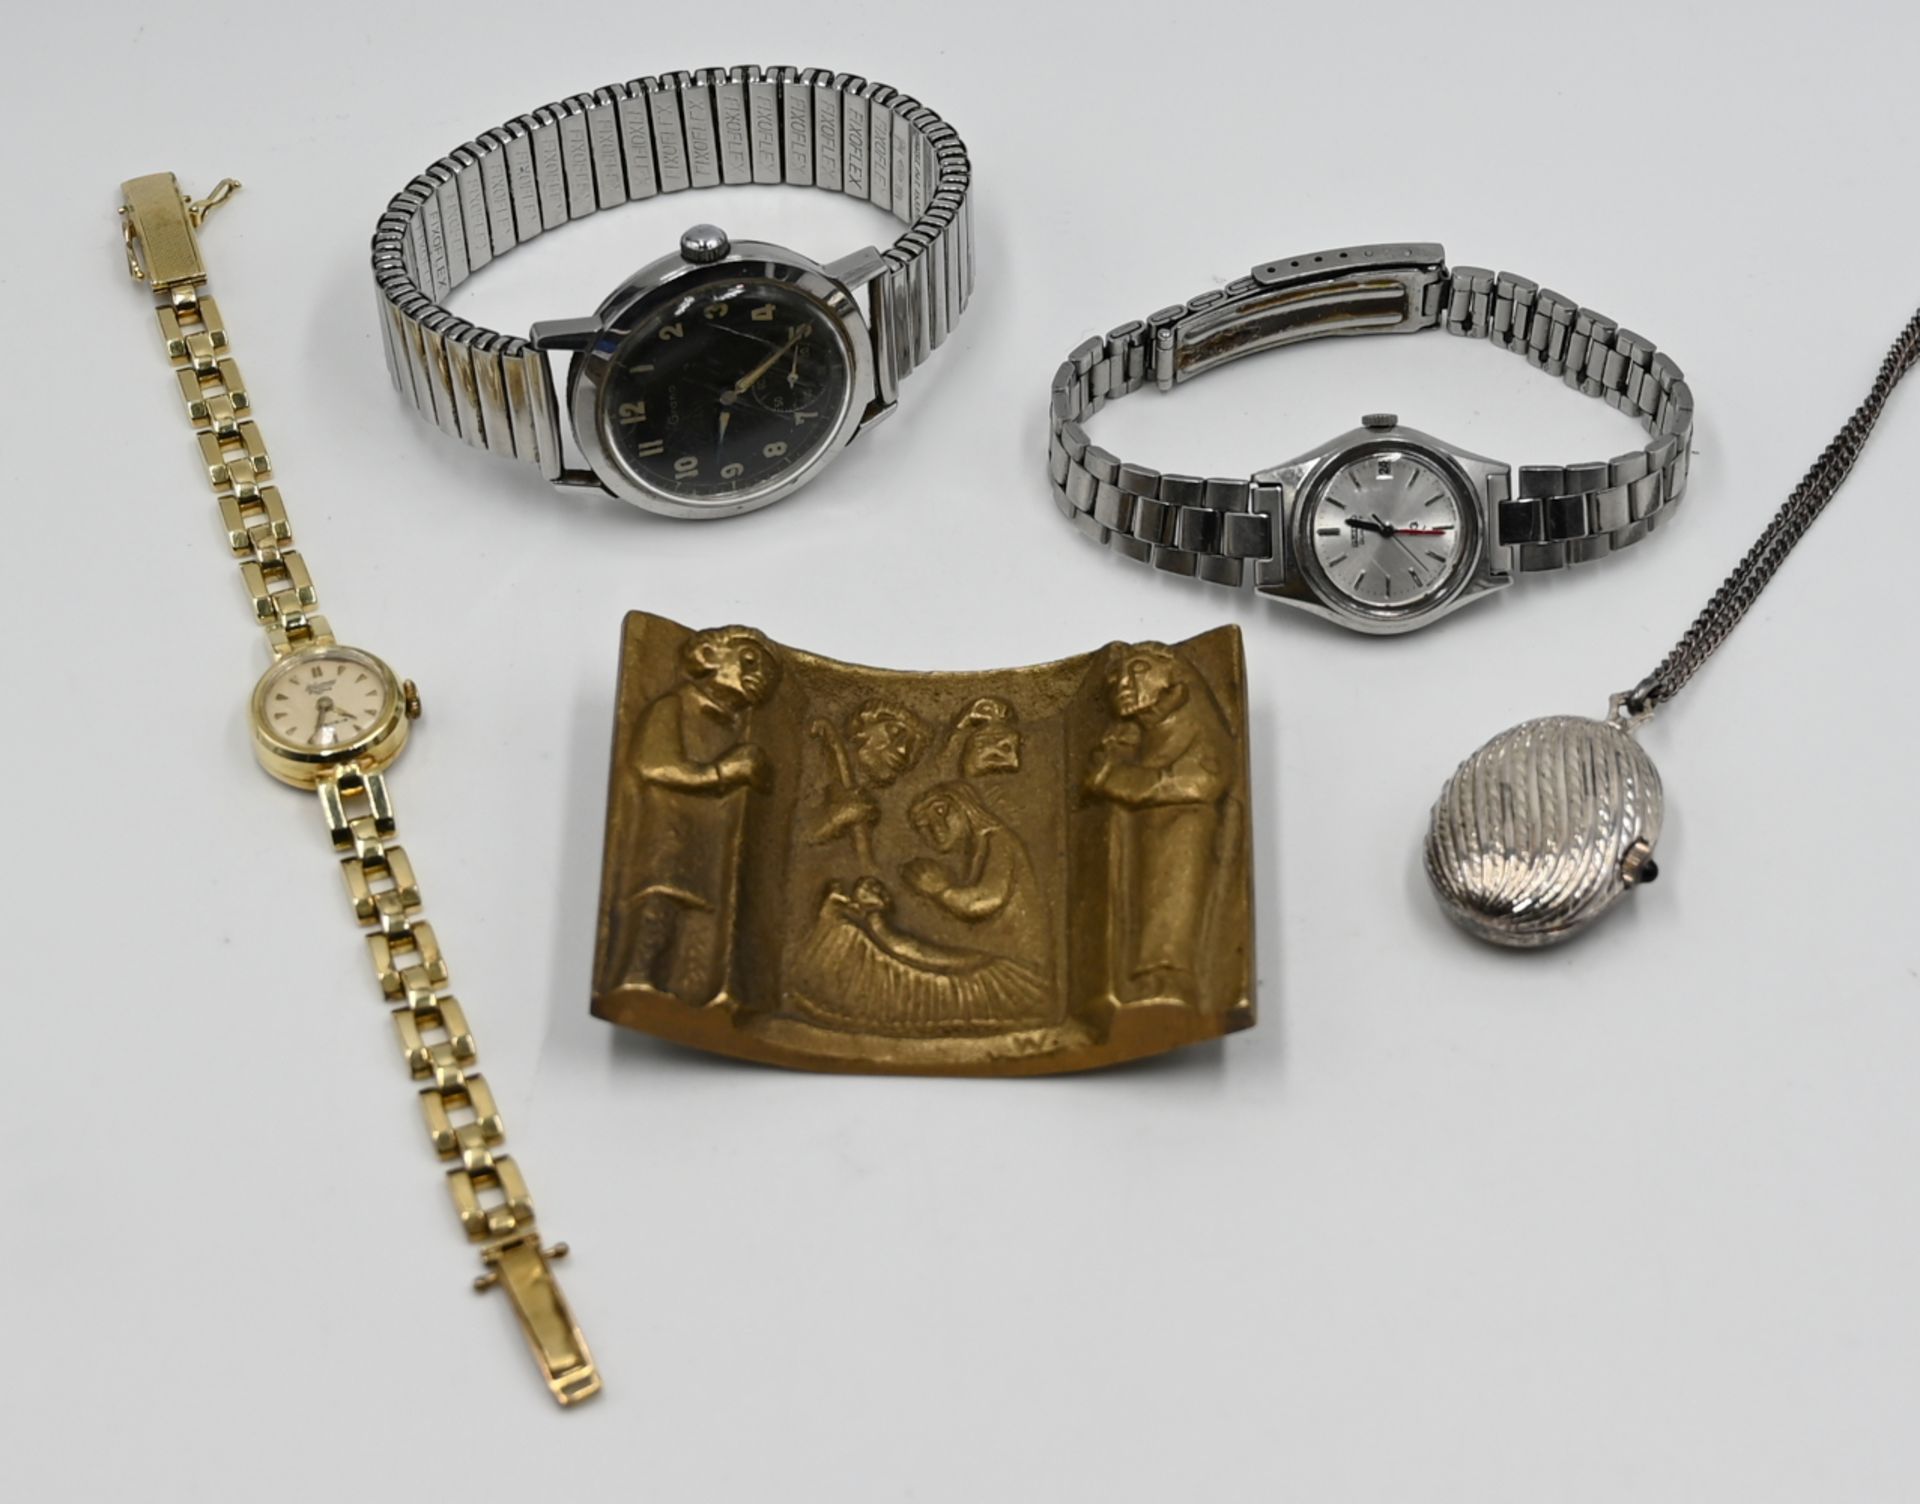 1 Damenarmbanduhr GG 14ct. BLUMUS, 2 Armbanduhren Metall SEIKO/GRANA, 1 Hängeuhr mit Kette, je Metal